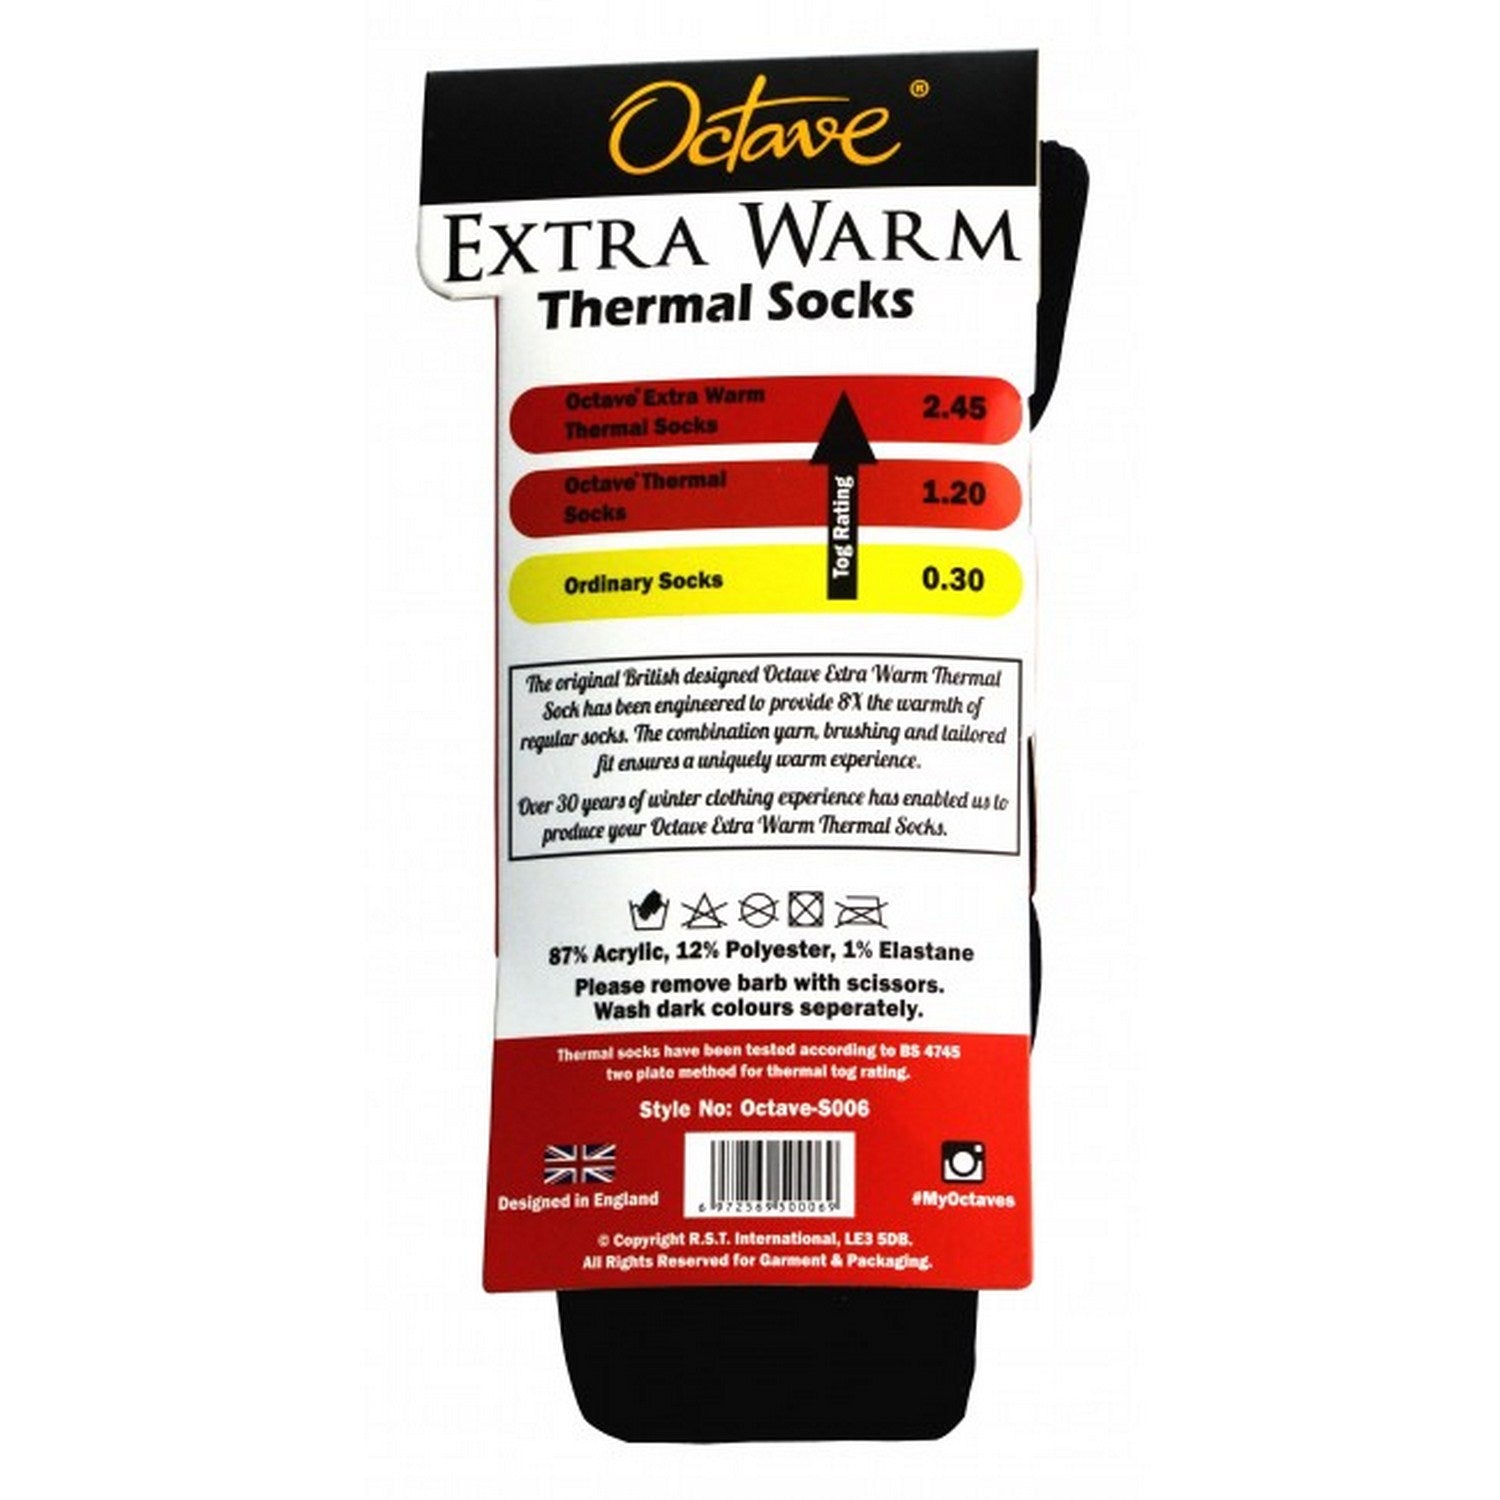 Octave® Mens Extra Warm Thermal Socks 2.45 Tog - Black - British Thermals